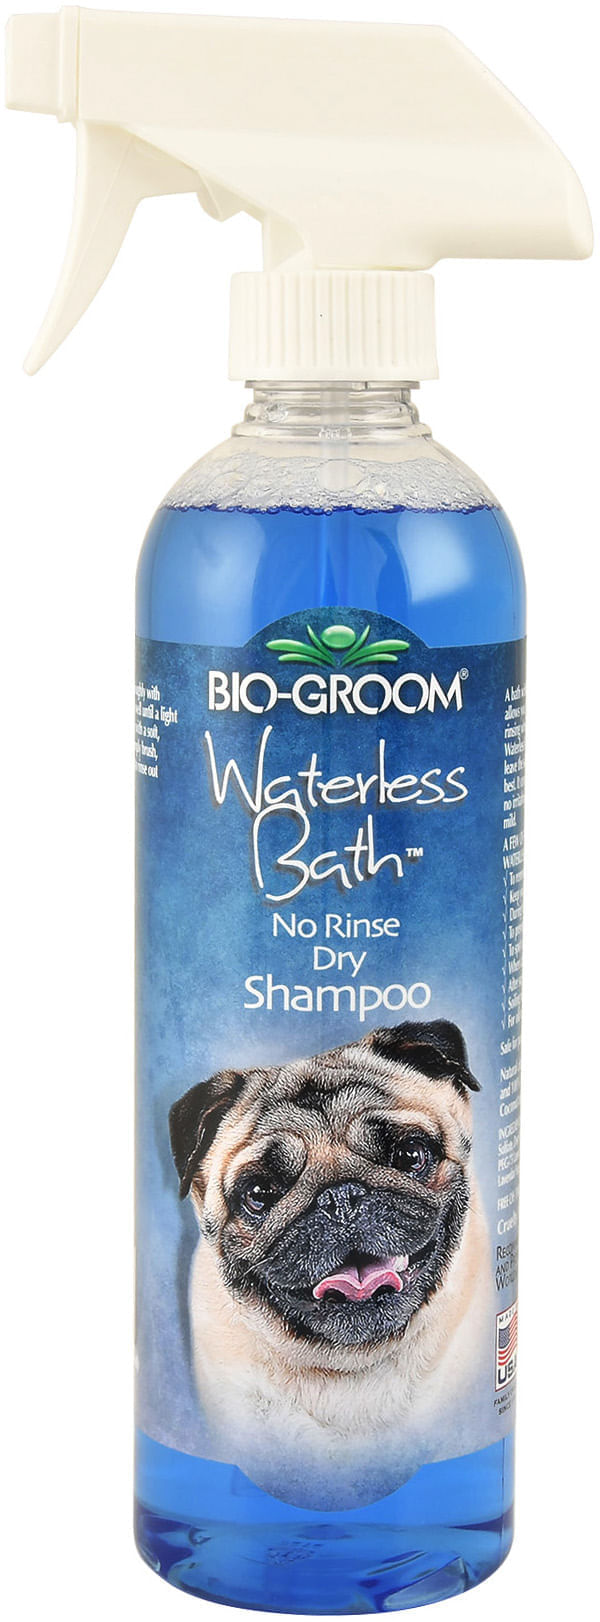 Waterless-Bath-No-Rinse-Shampoo-16-oz